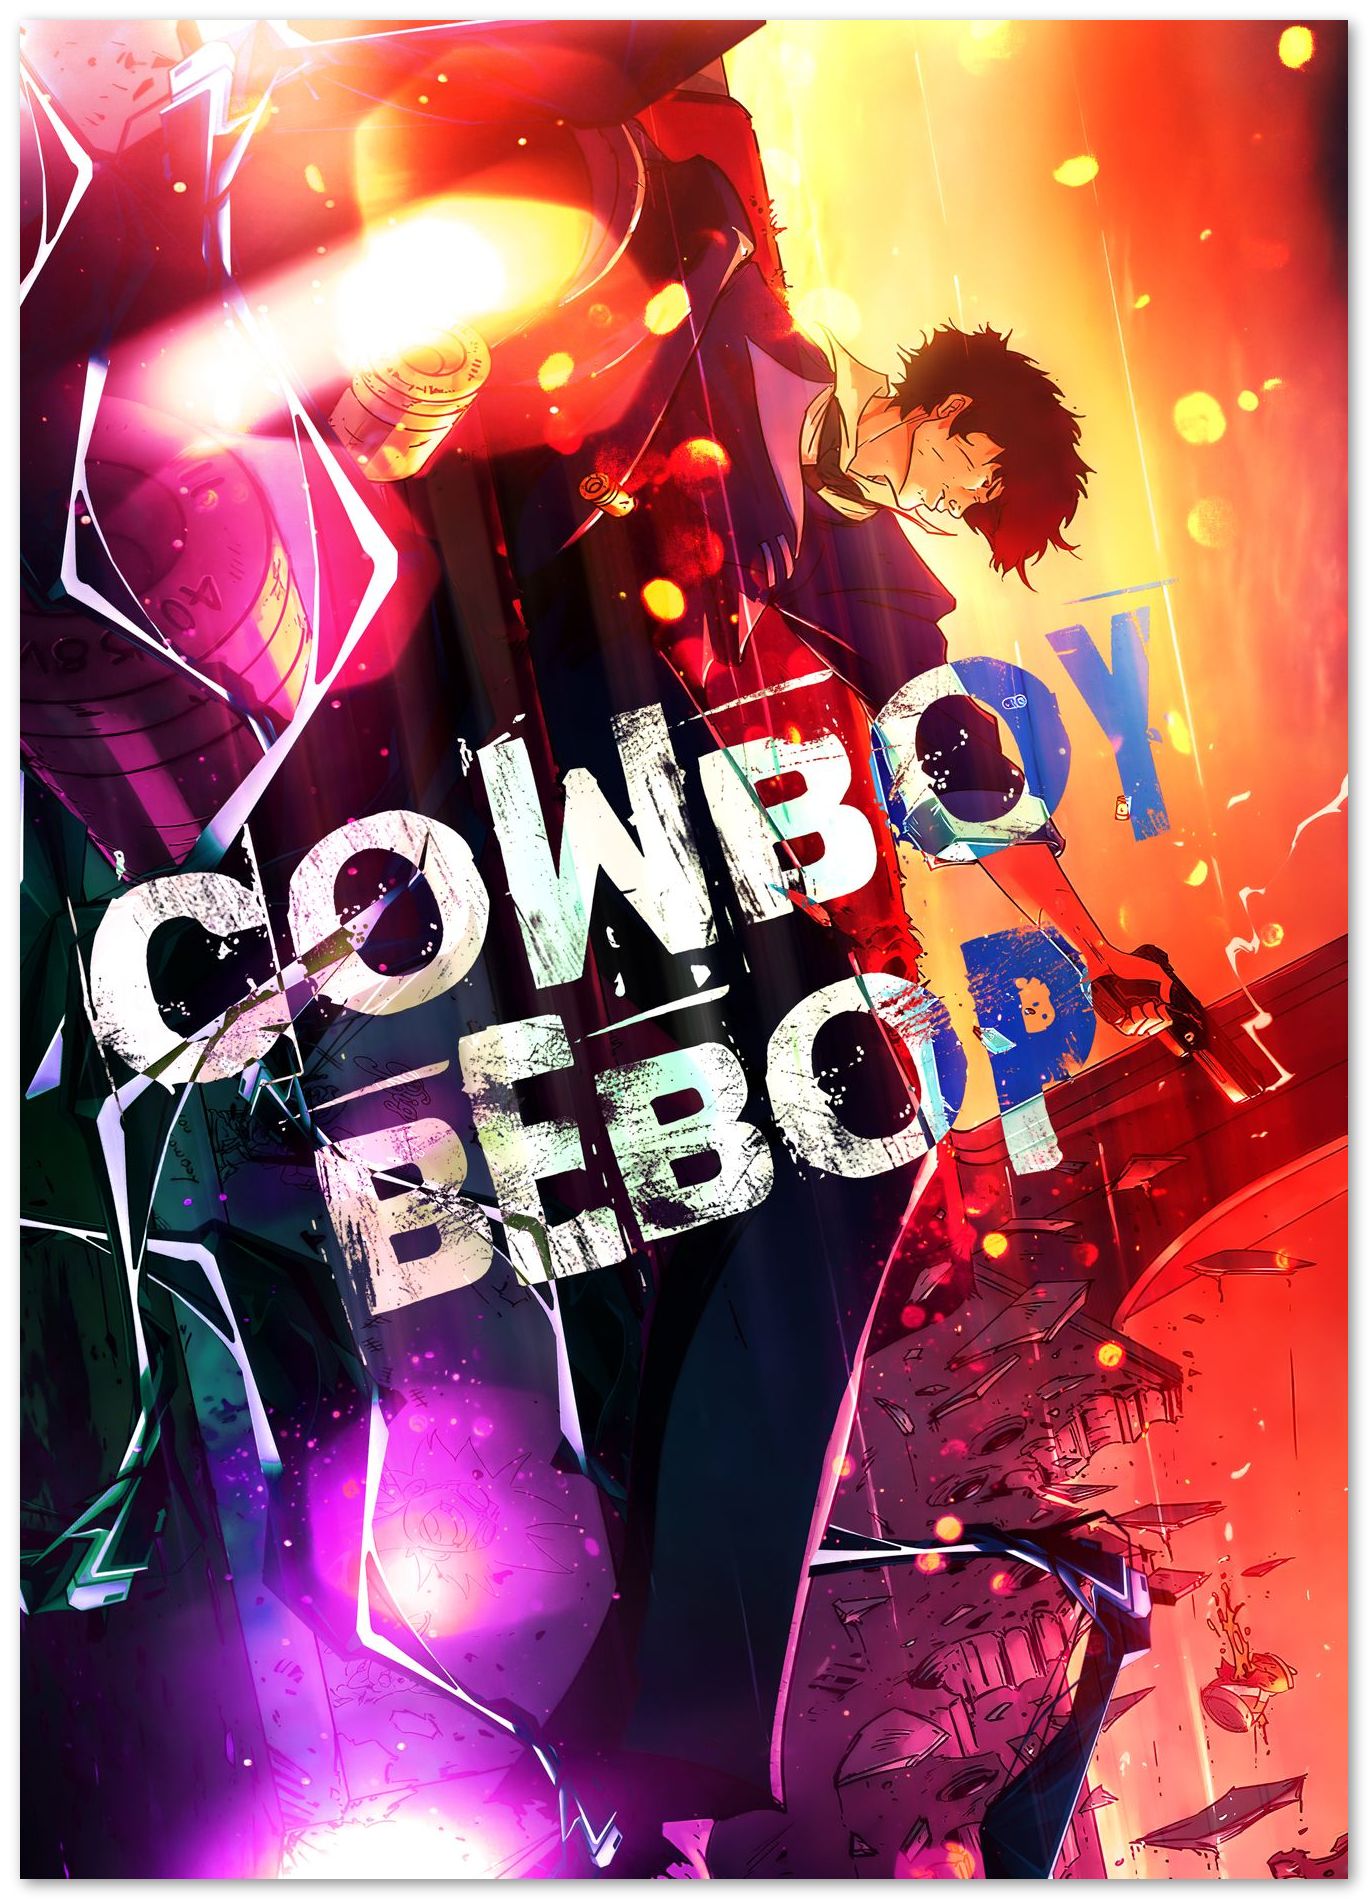 Cowboy Bebop abstract cover art - @SyanArt